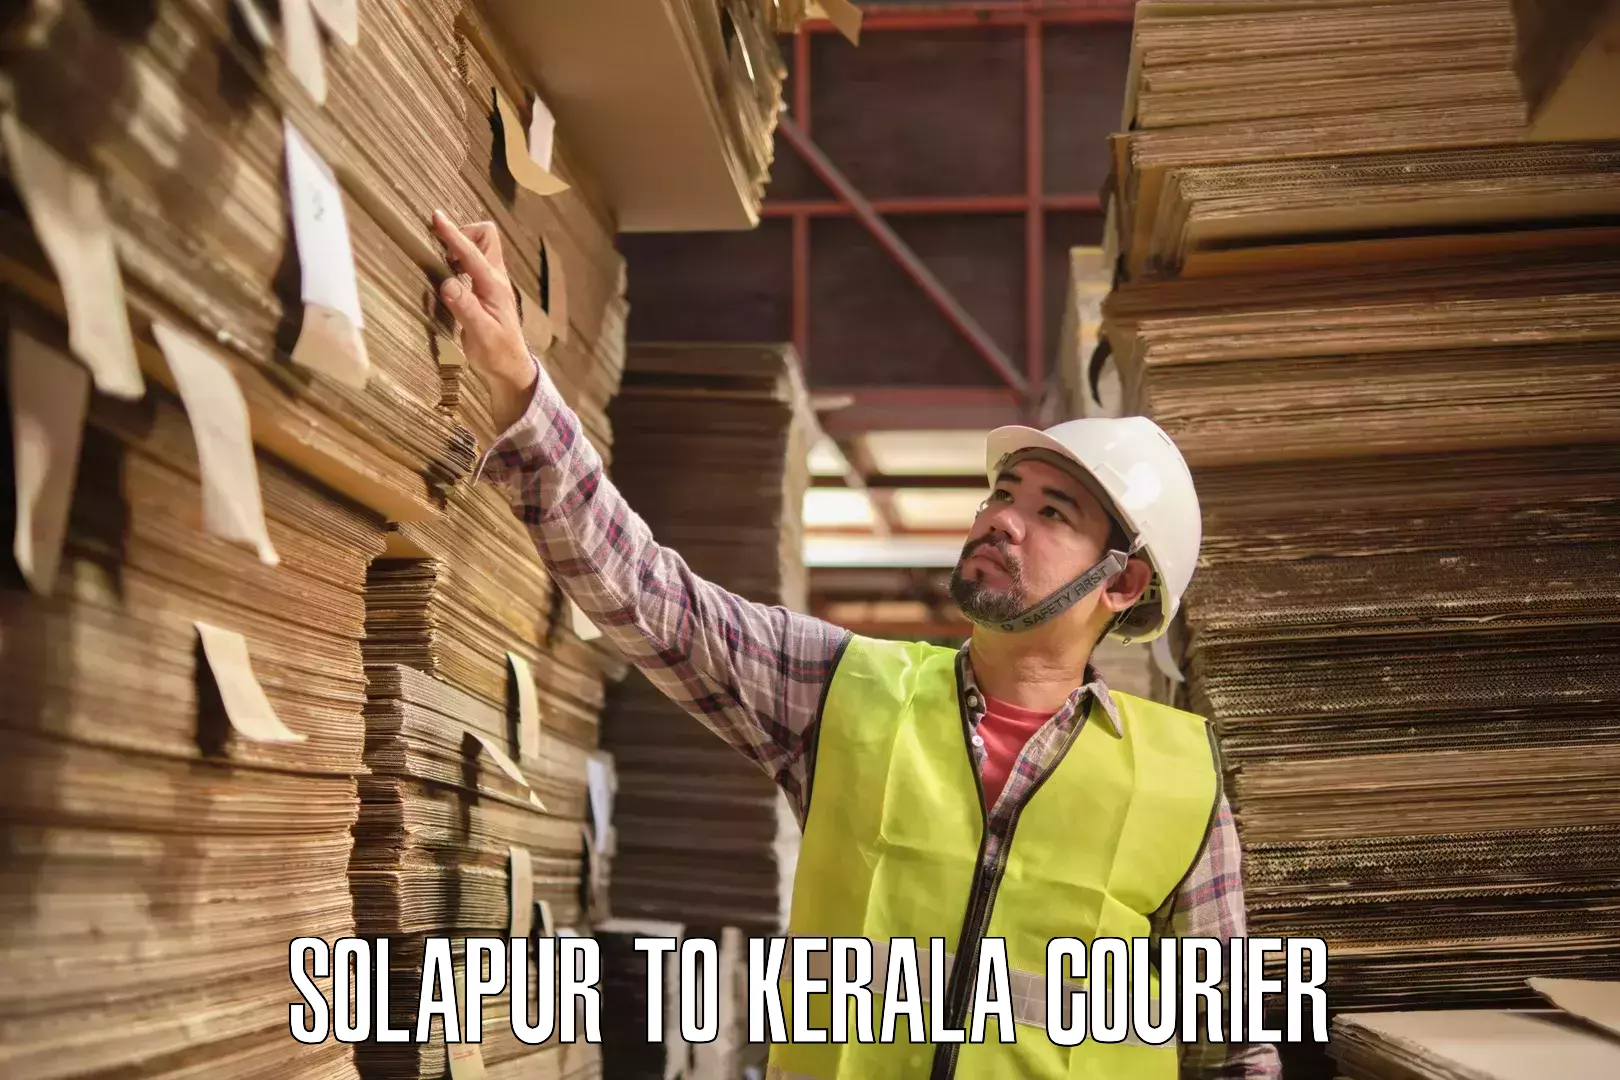 International courier networks Solapur to Kerala